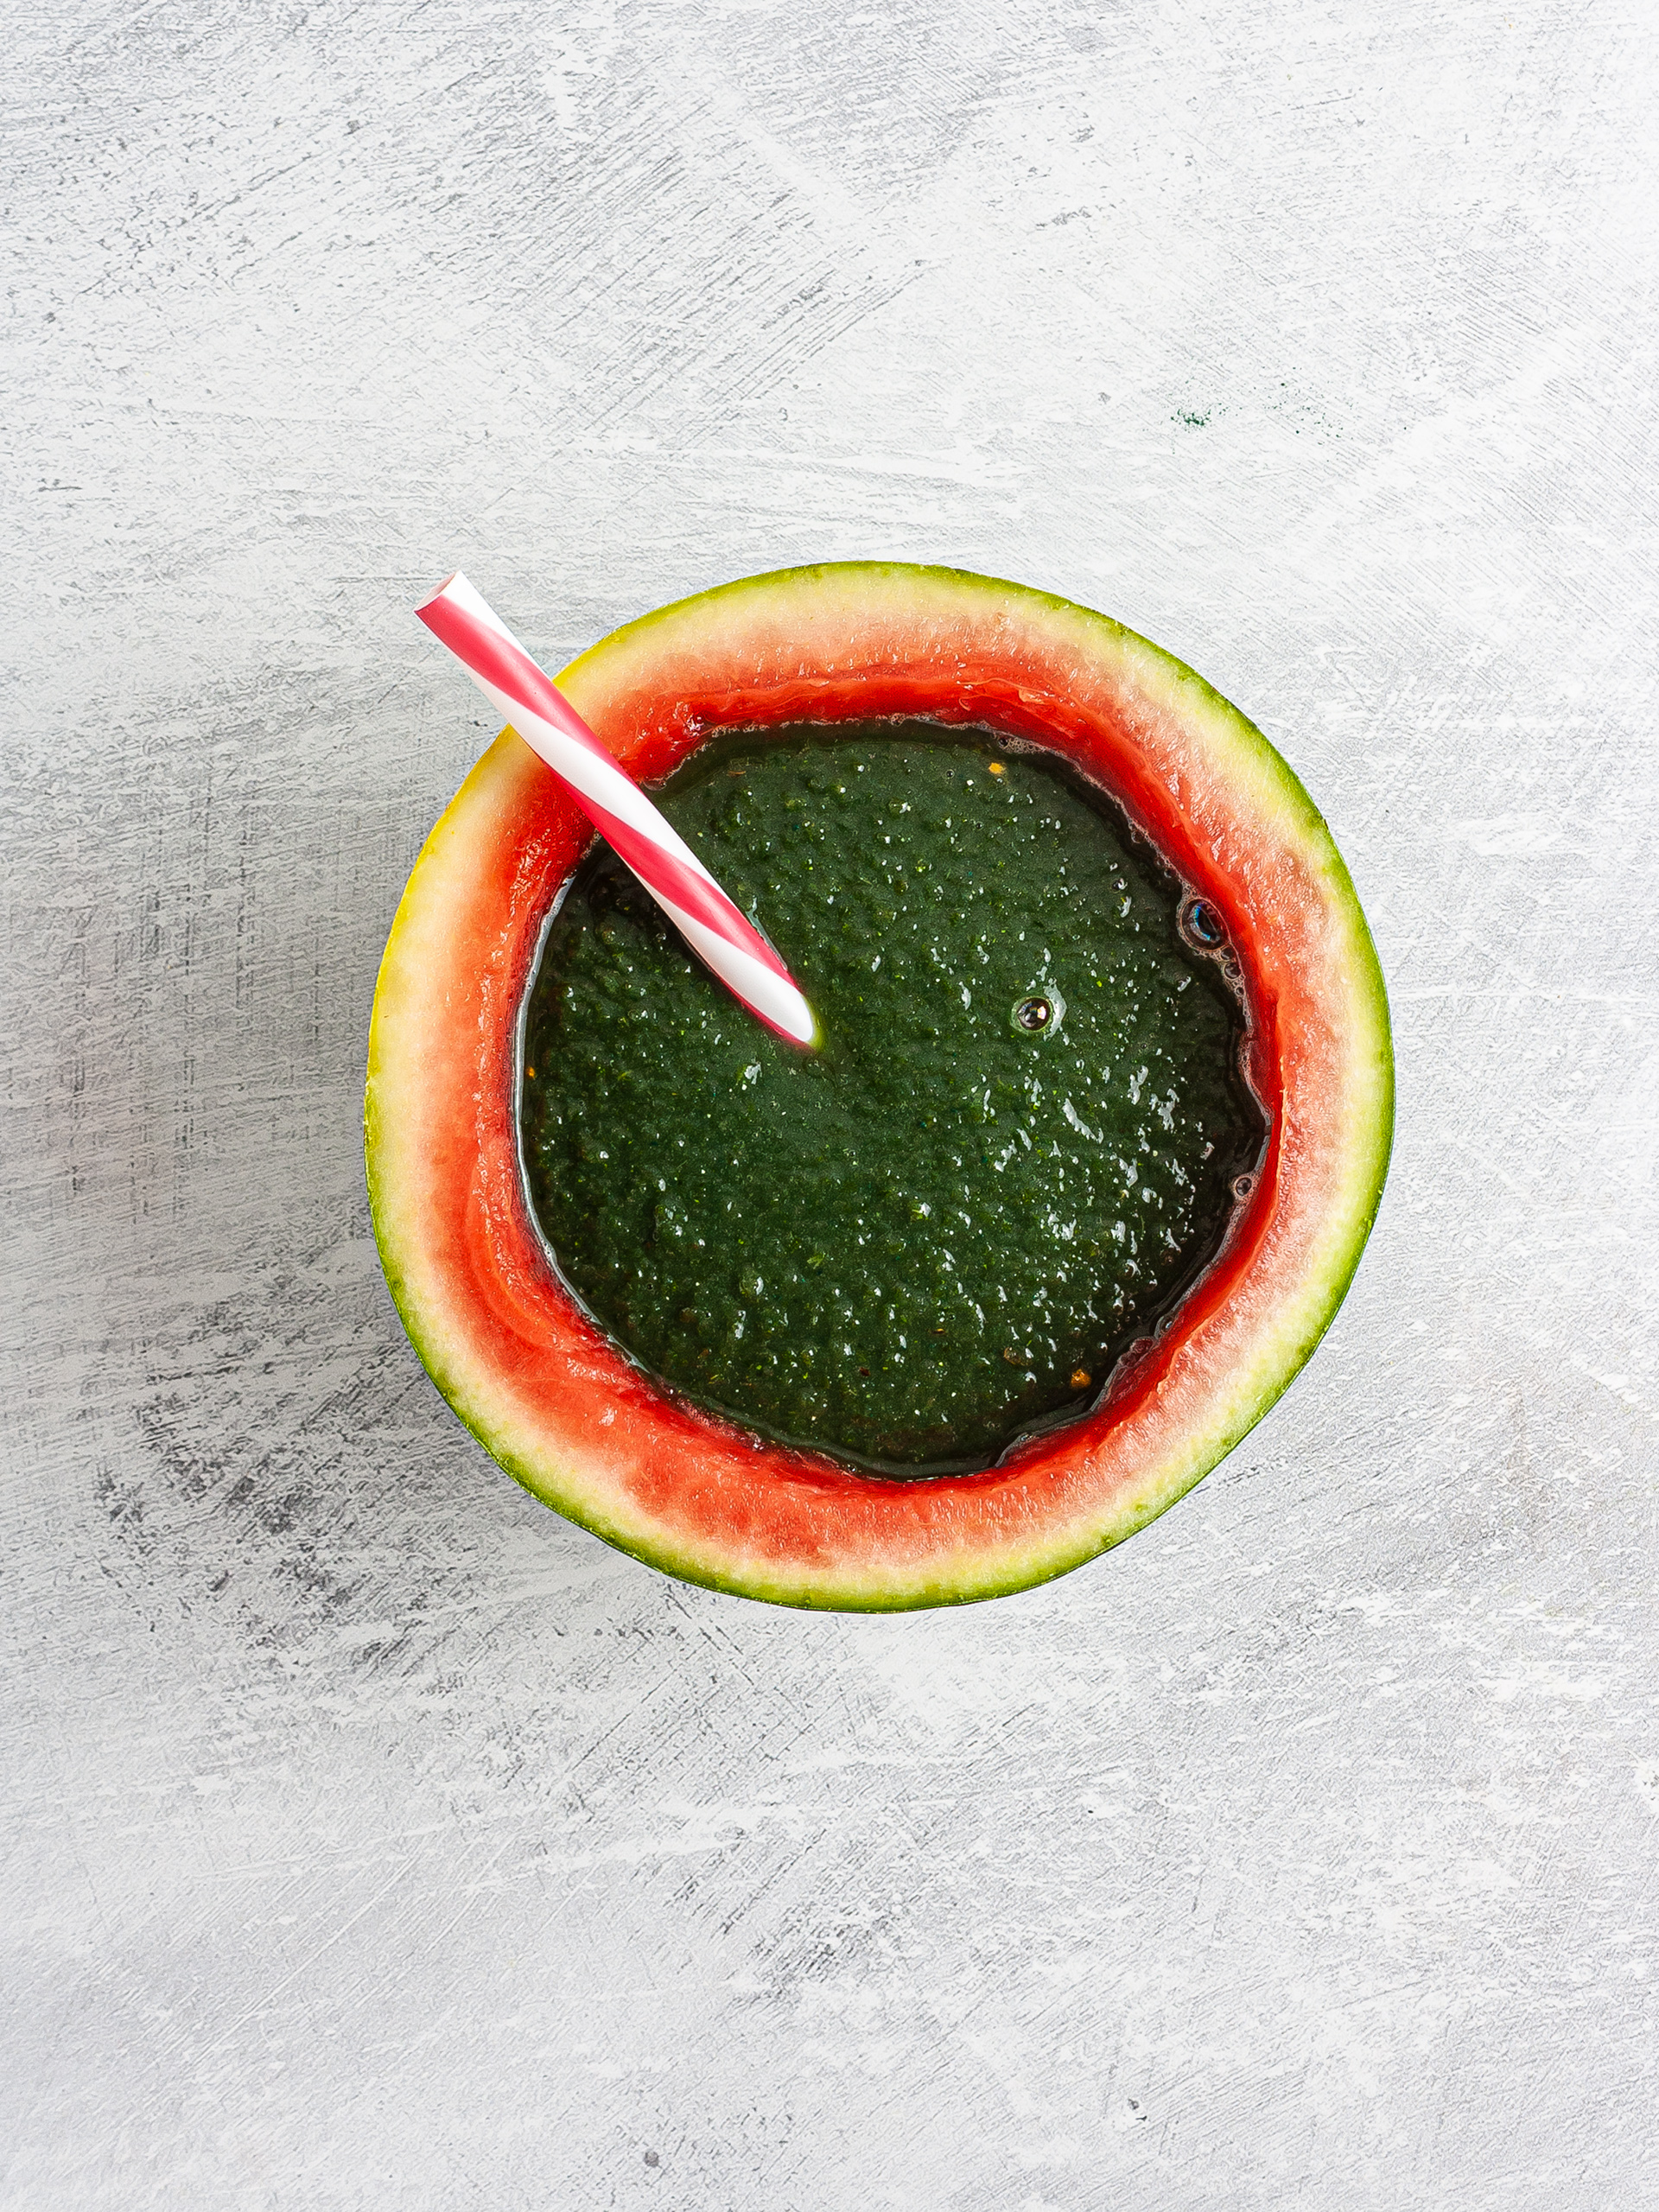 Watermelon kale smoothie in watermelon bowl